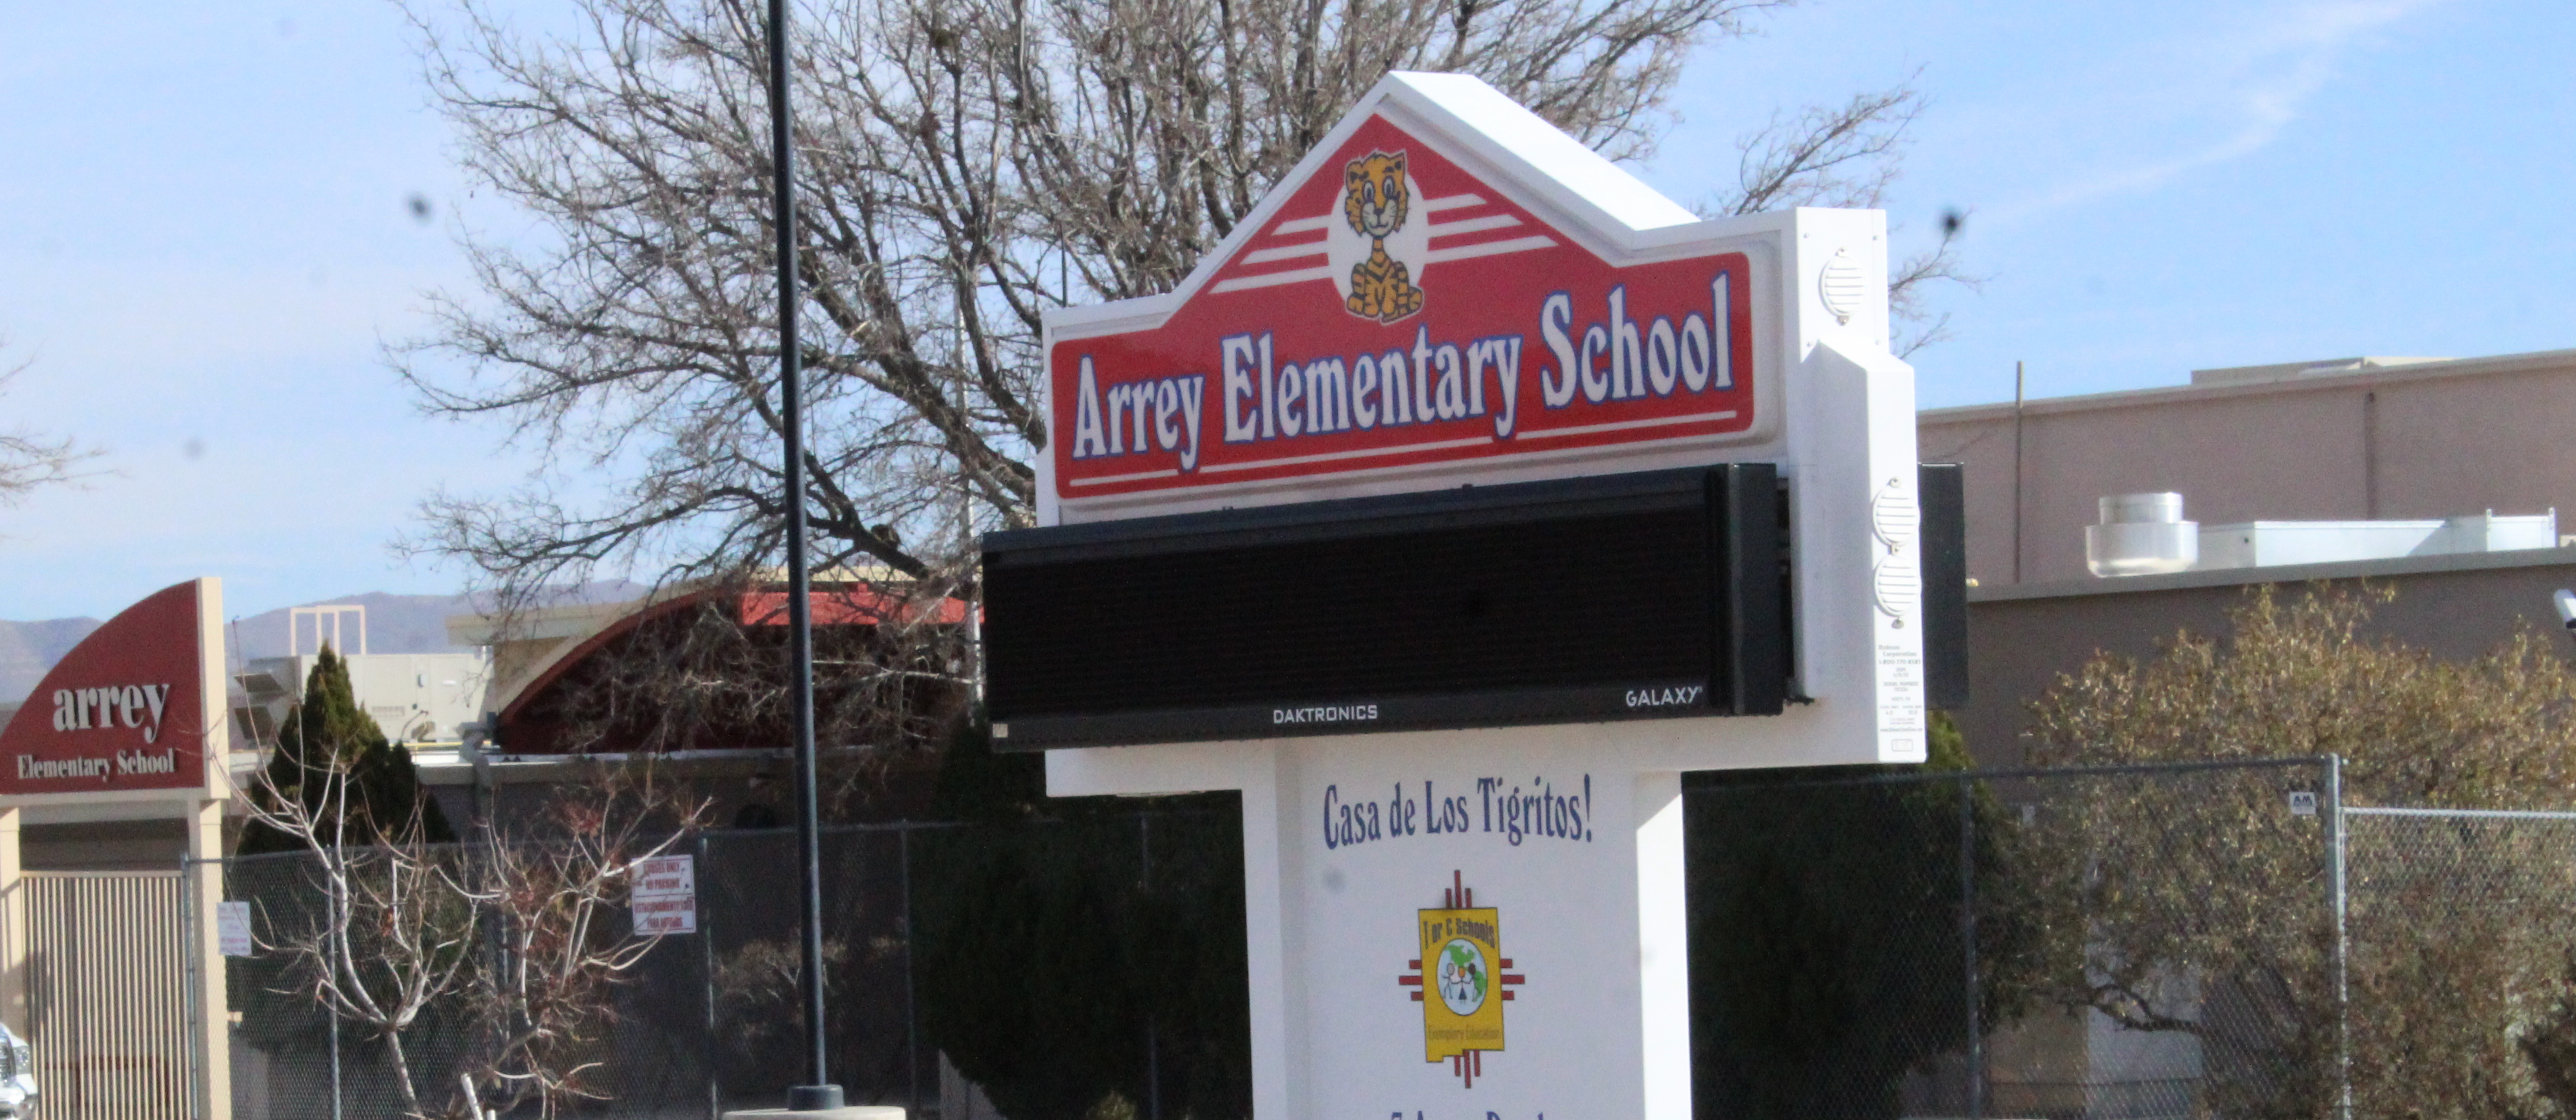 Arrey Elementary School